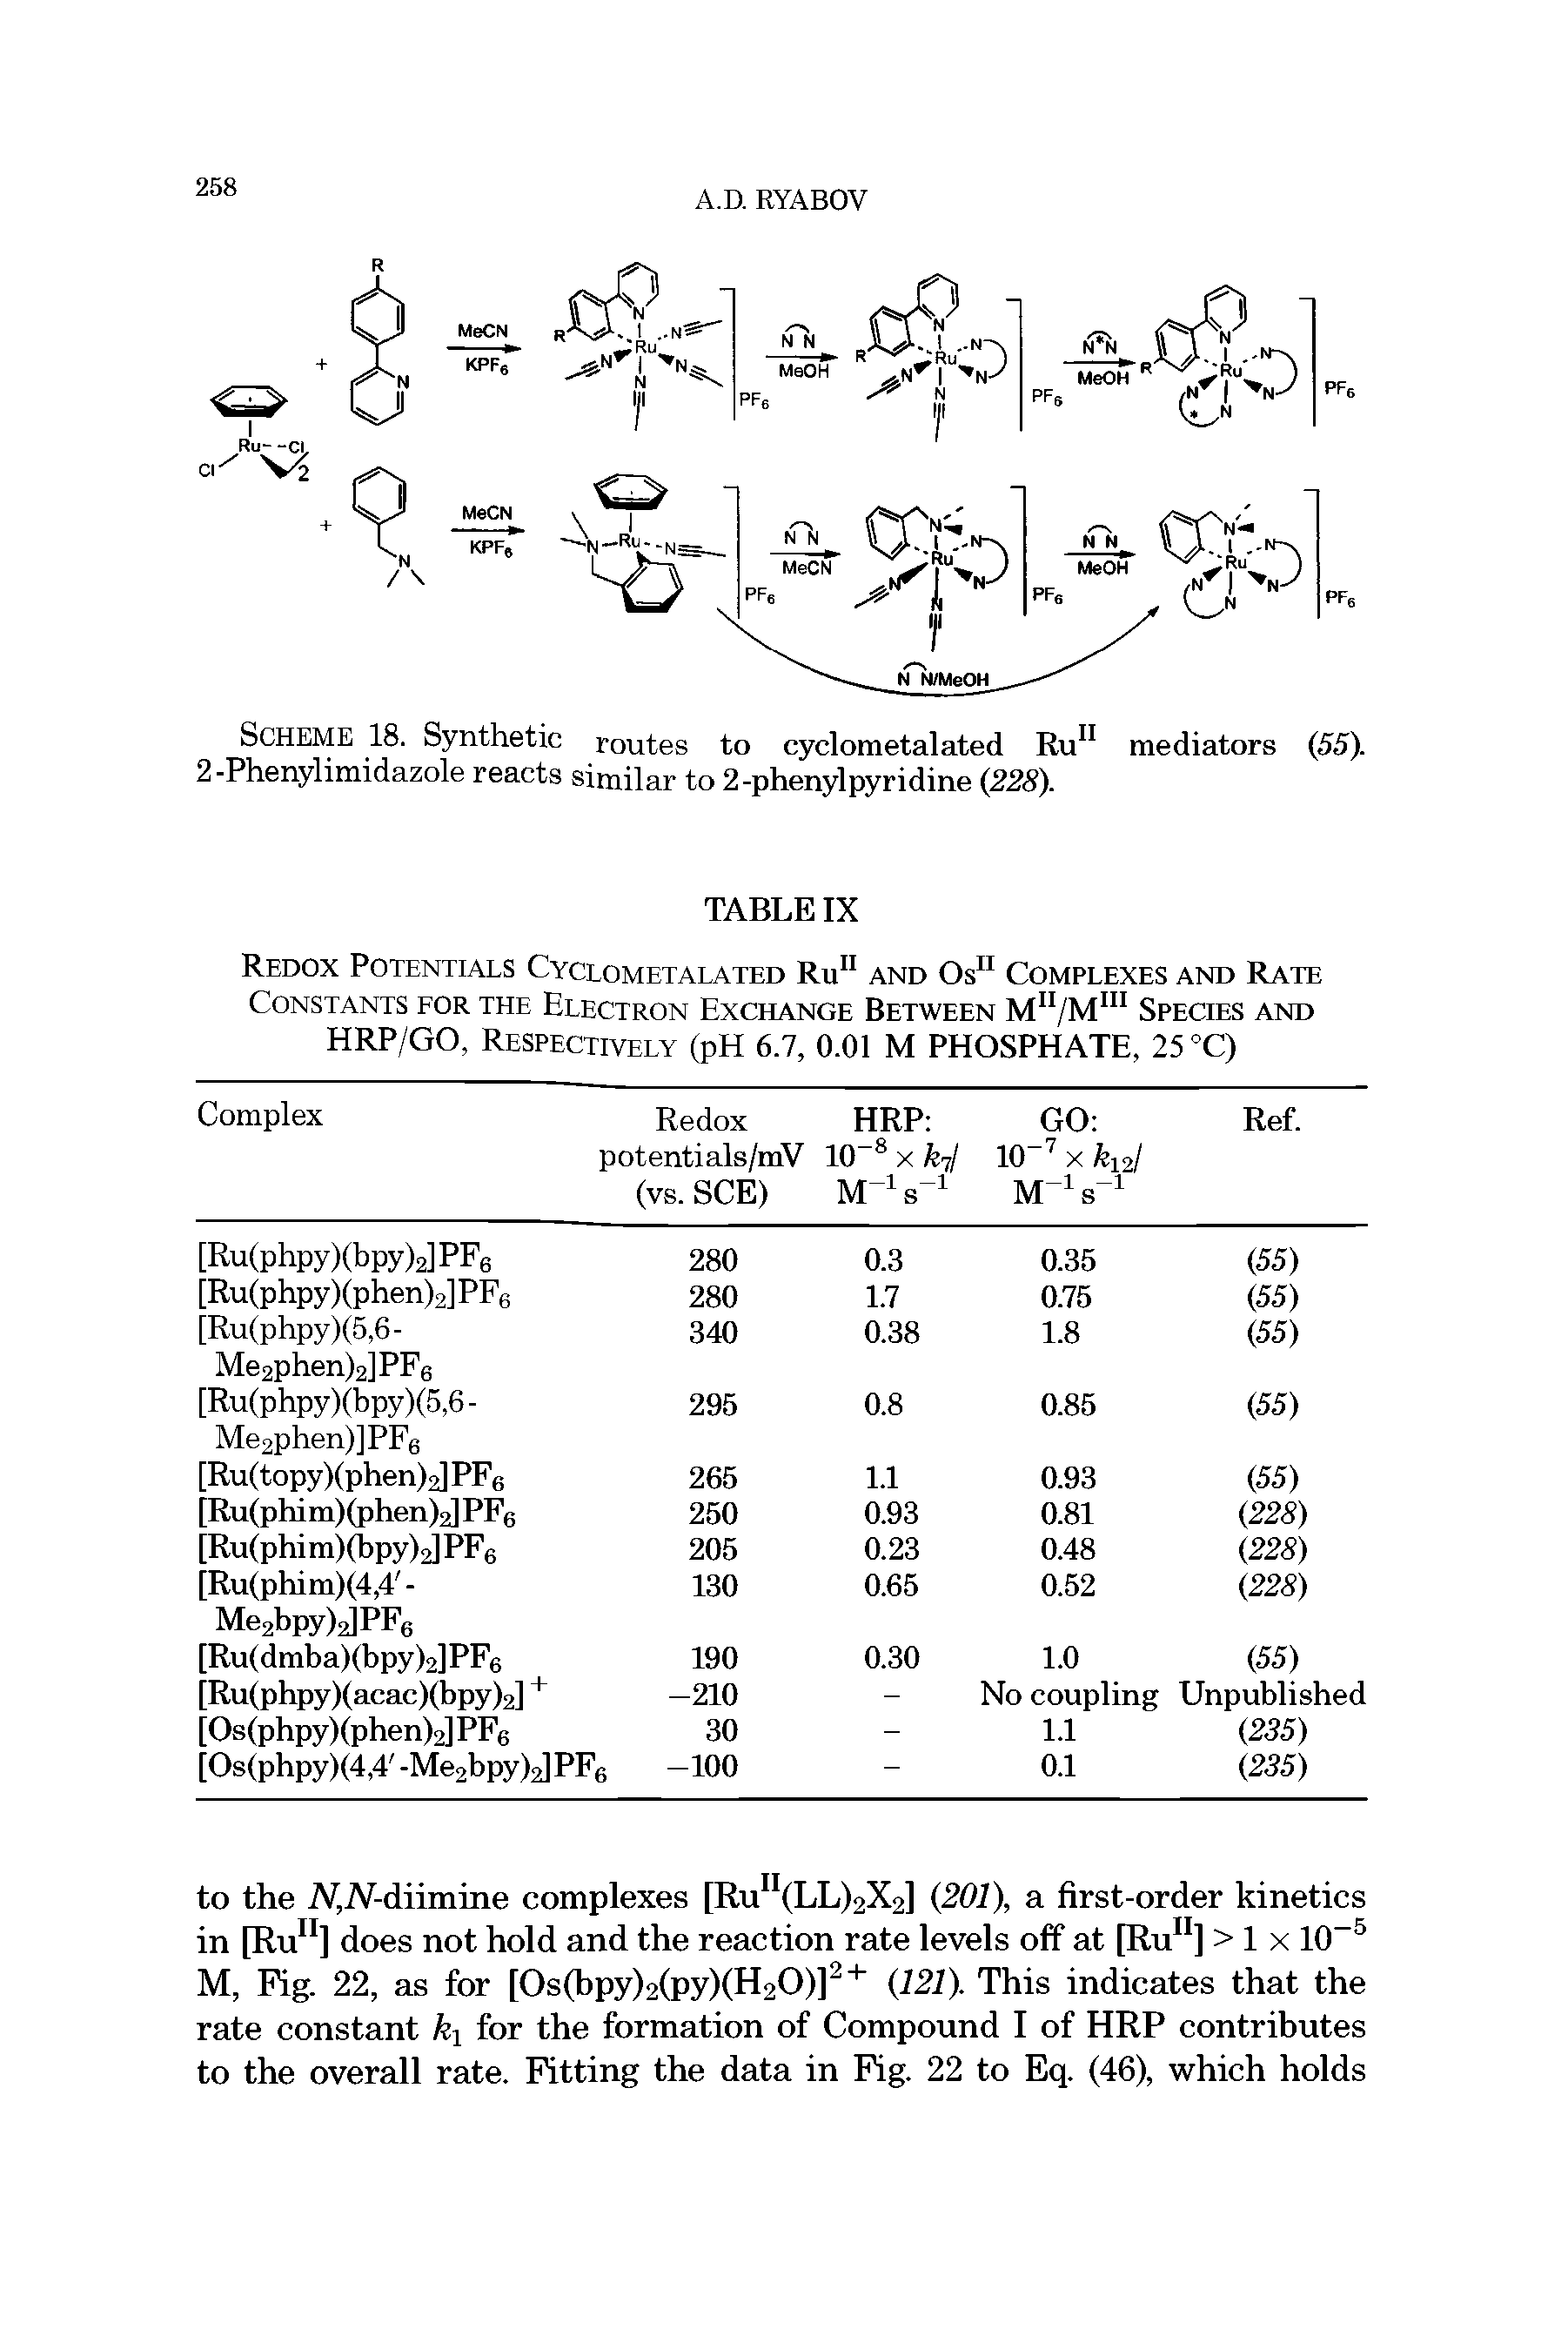 Scheme 18. Synthetic routes to cyclometalated Ru11 mediators (55). 2-Phenylimidazole reacts similar to 2-phenylpyridine (228).